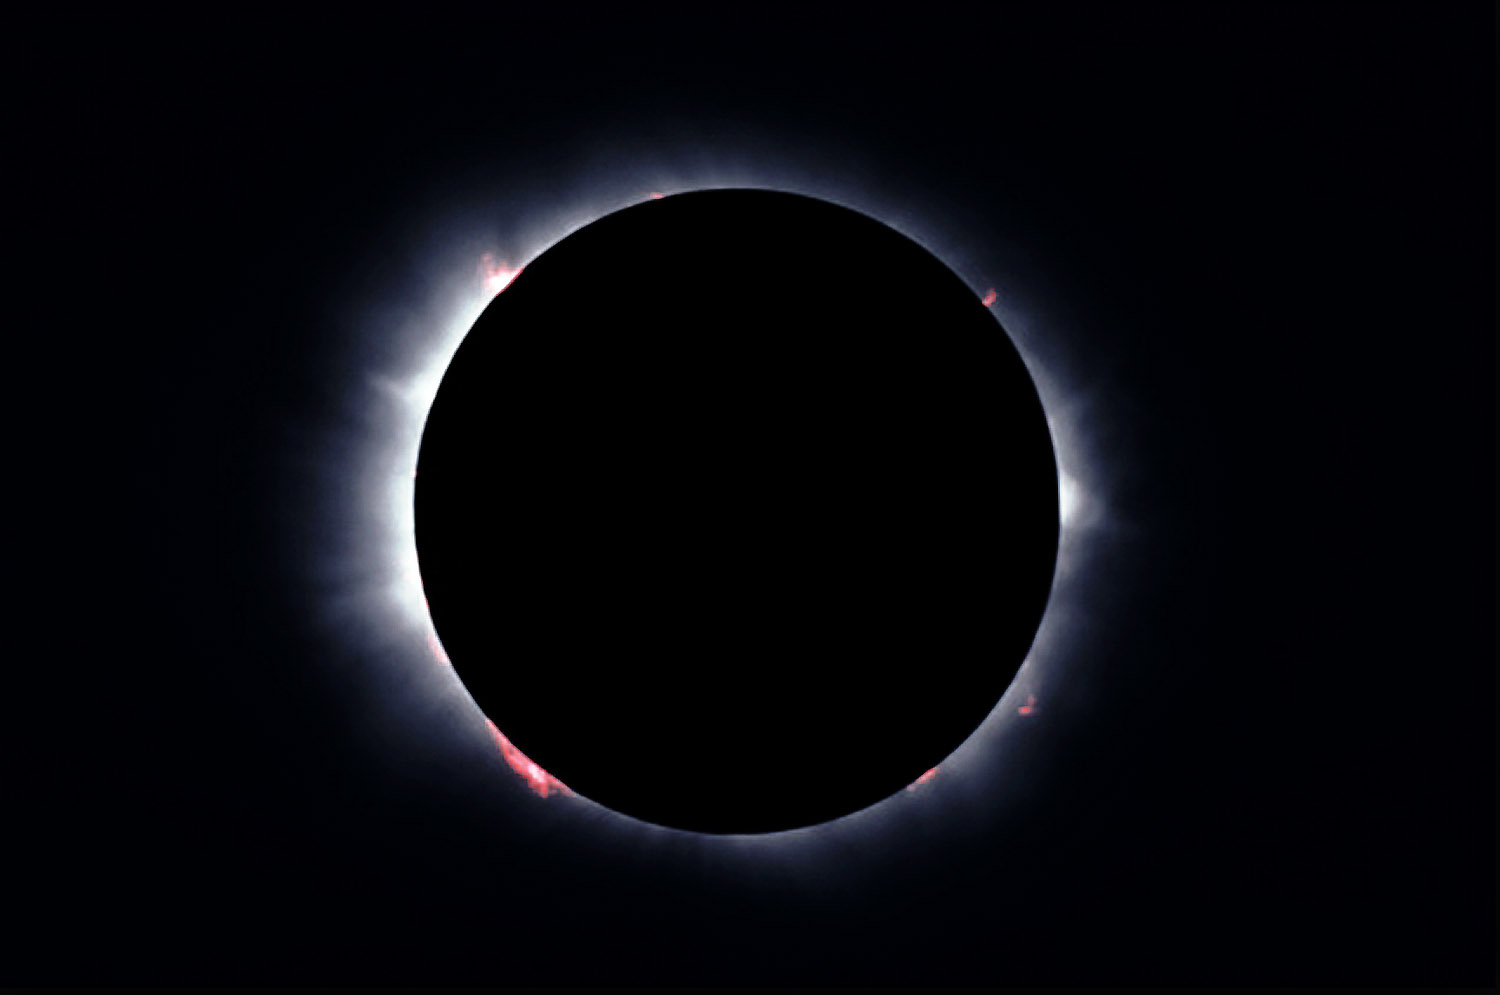 Eclipse 1979 - A30 - Inner Corona